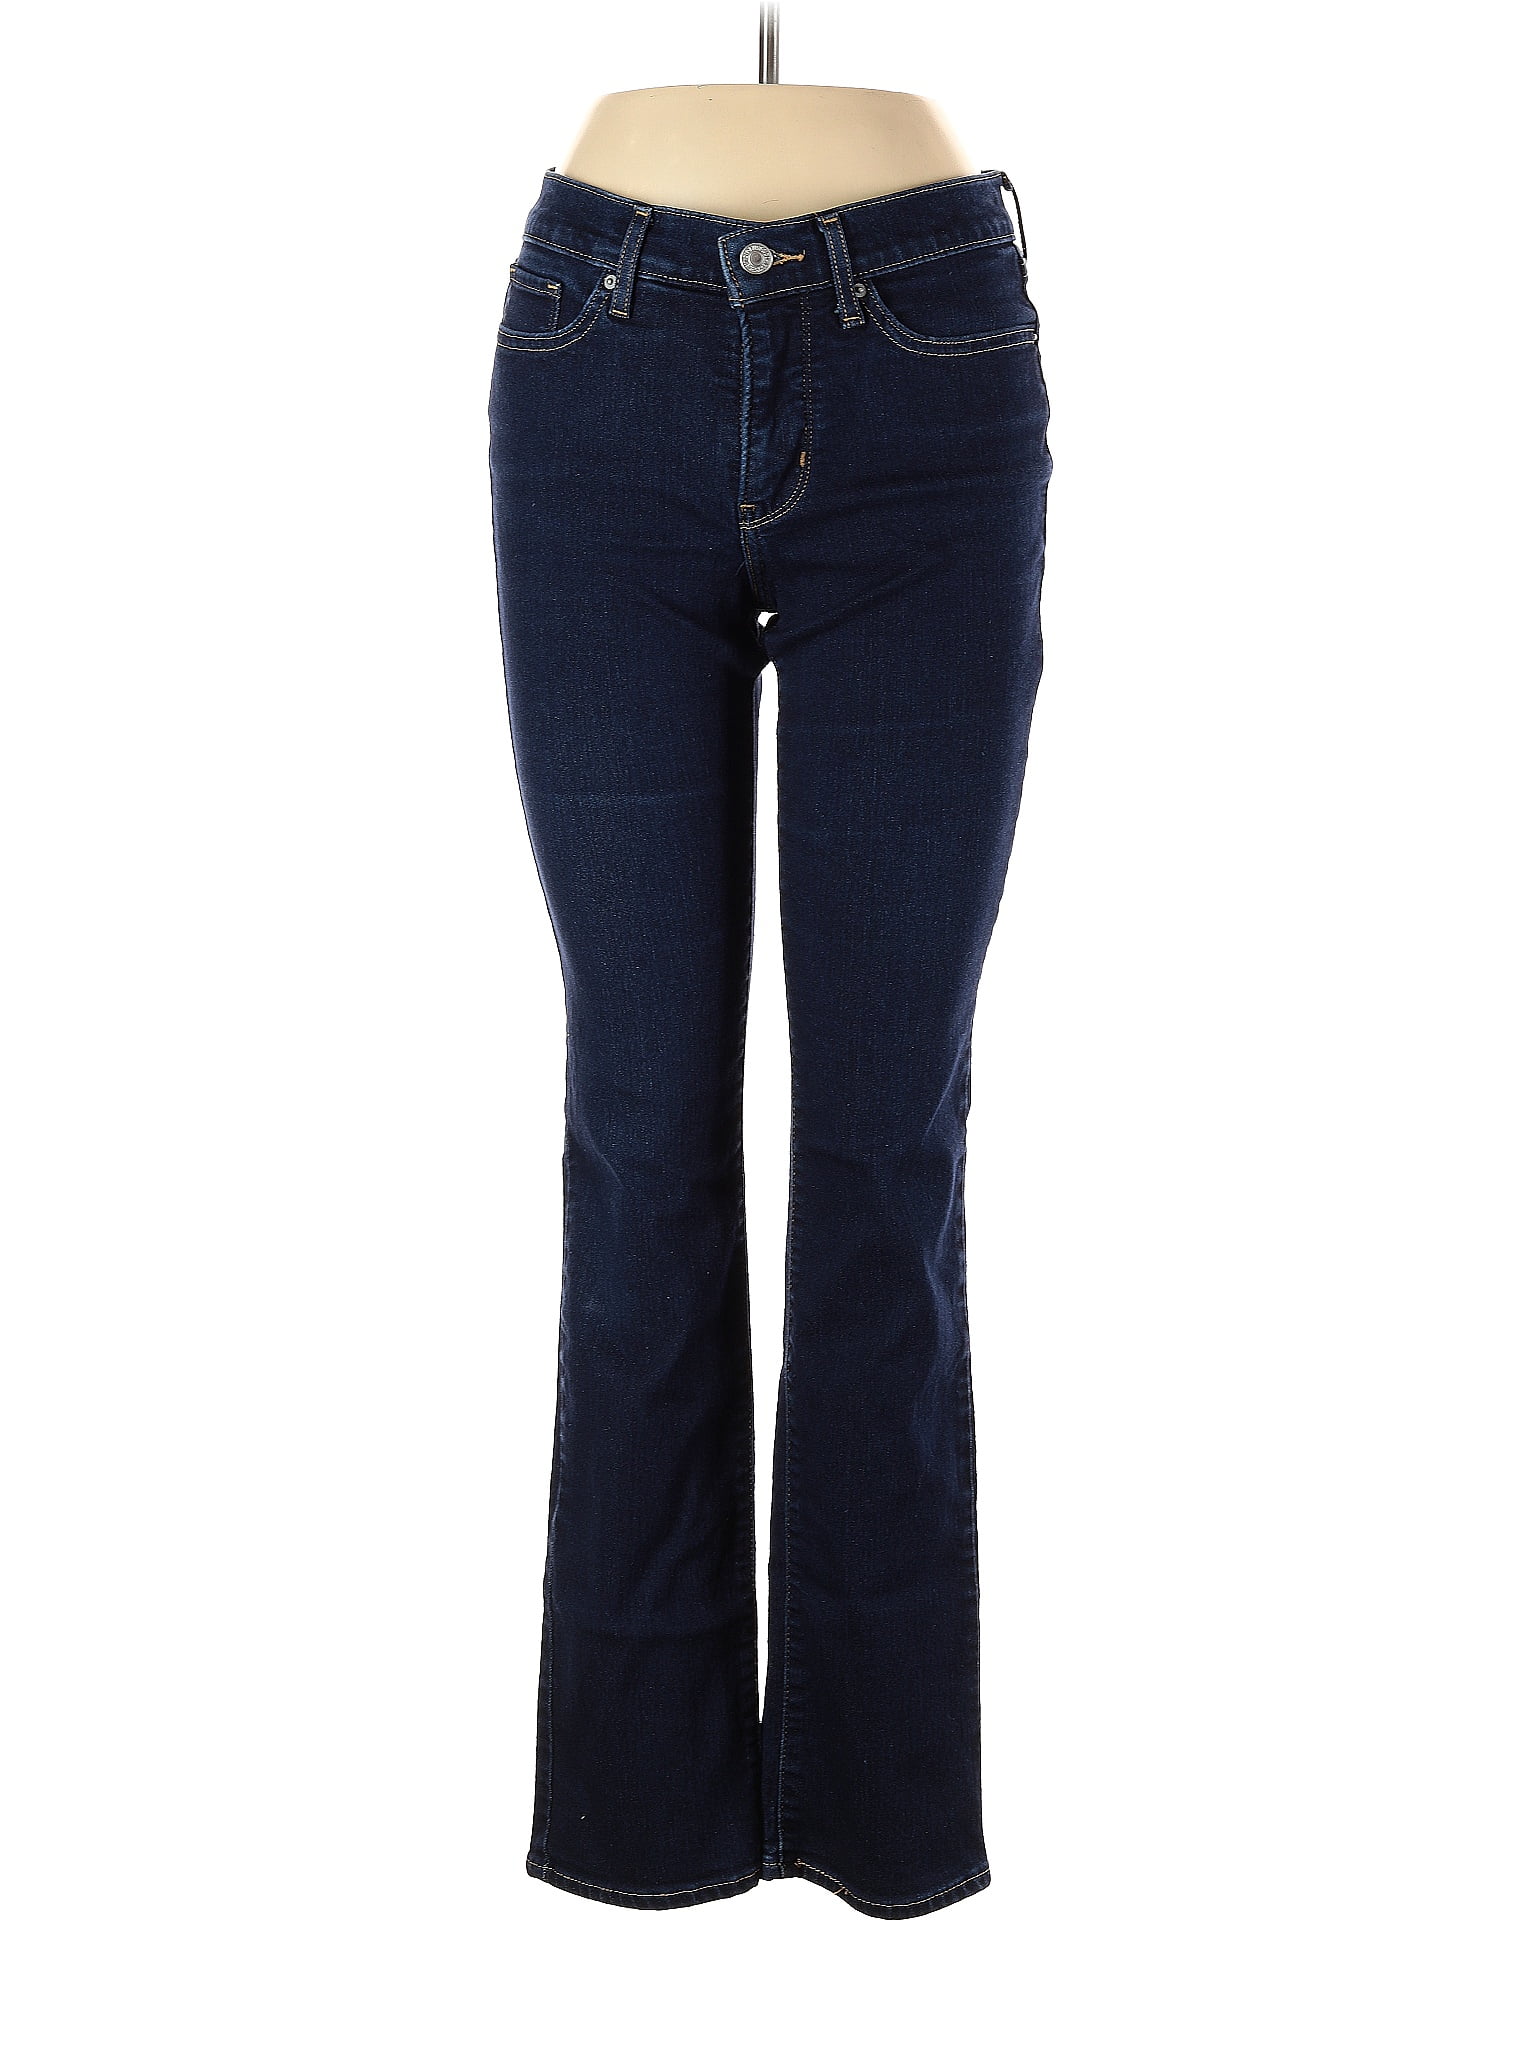 Levi's Solid Blue Jeans 28 Waist - 70% off | ThredUp